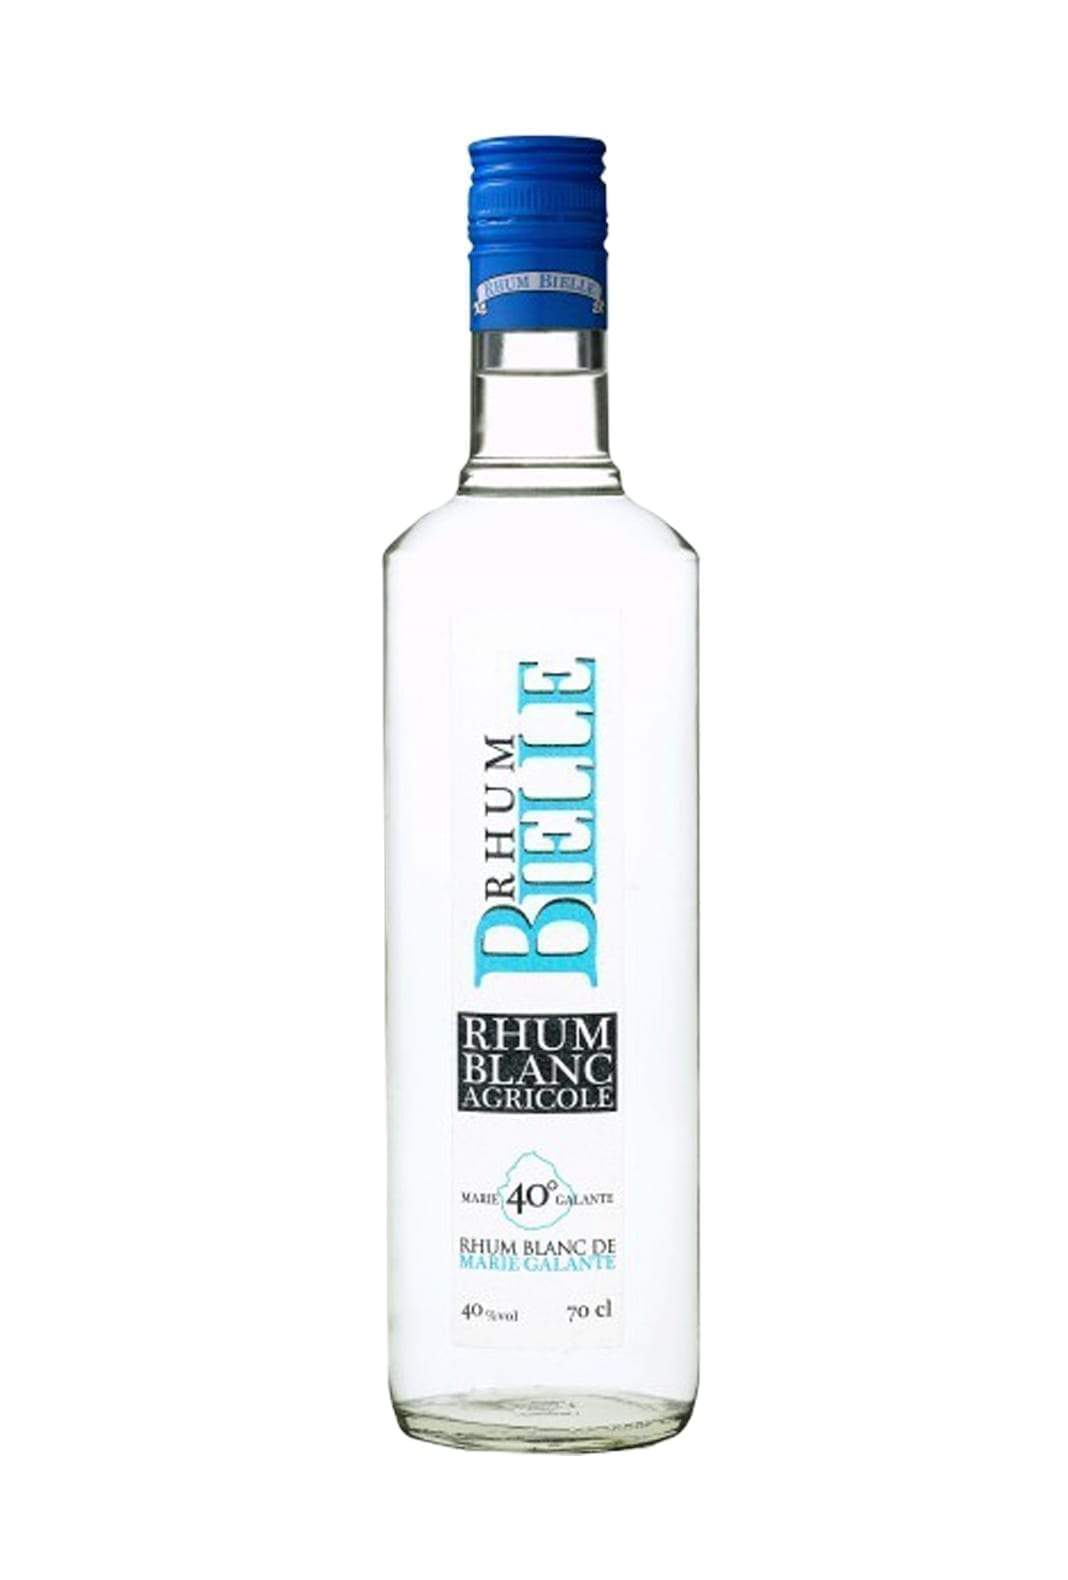 Bielle Rum Anita Blanc (White) 40% 700ml | Rum | Shop online at Spirits of France